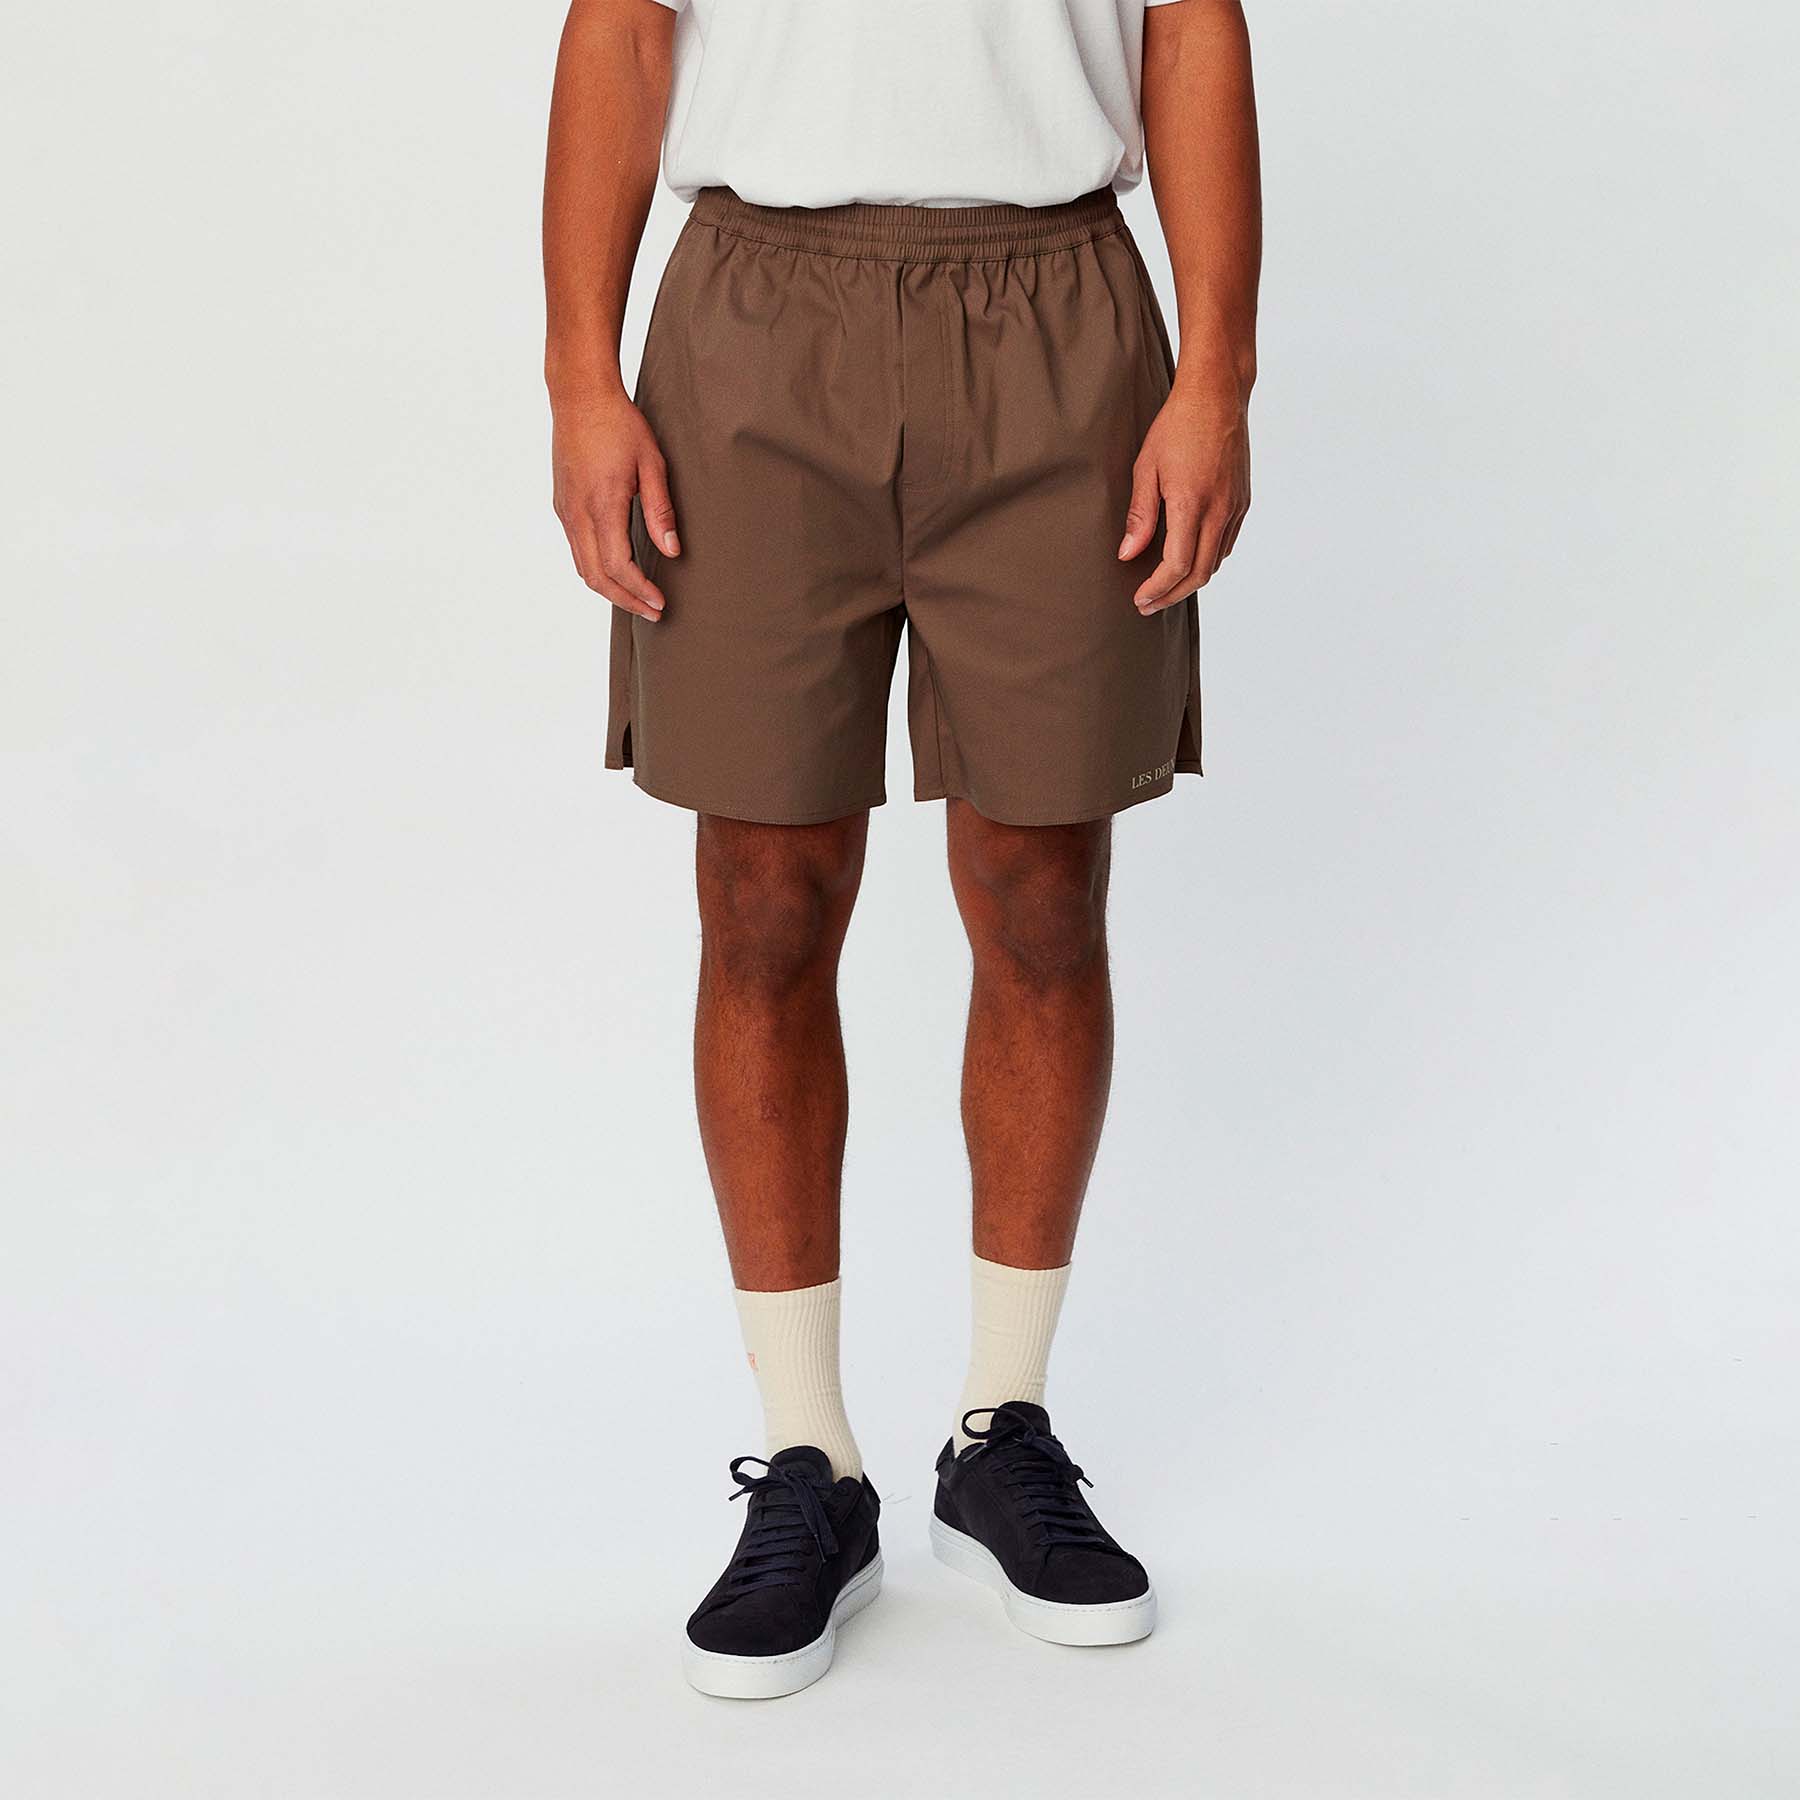 Les Deux - Raphael shorts - Herreshorts - Grå - S